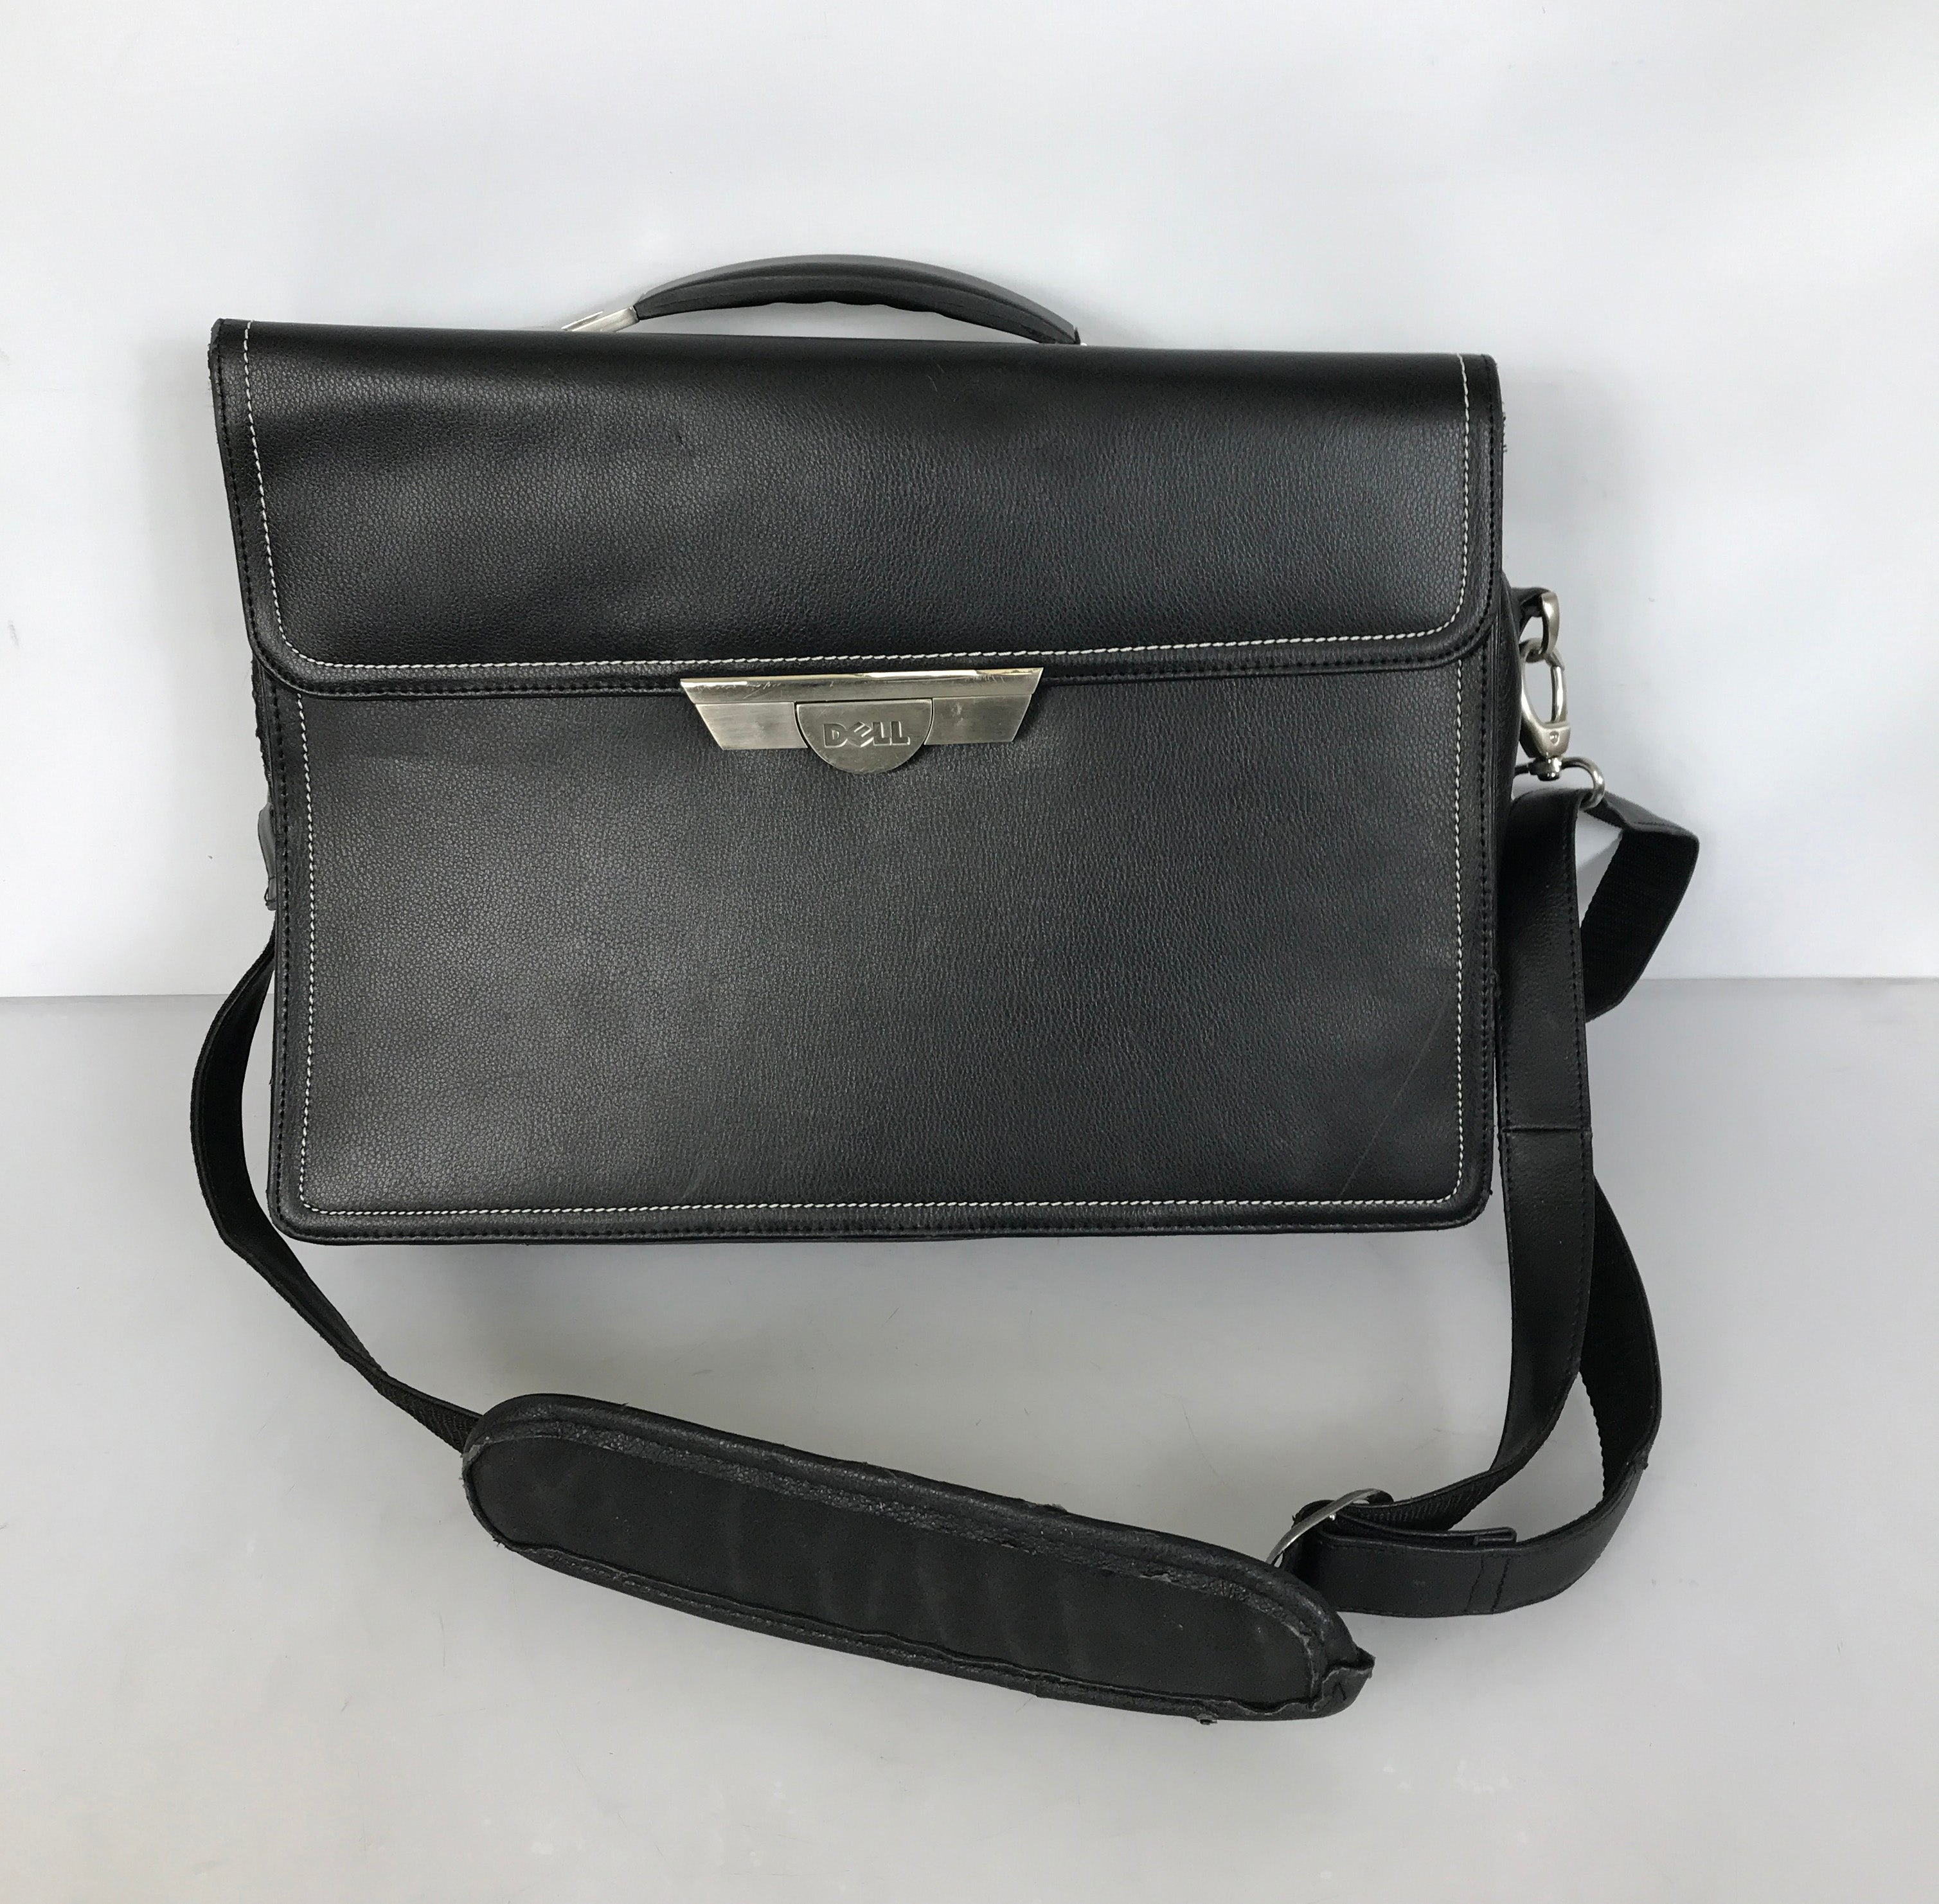 Dell Black Faux Leather Enveloped Laptop Bag